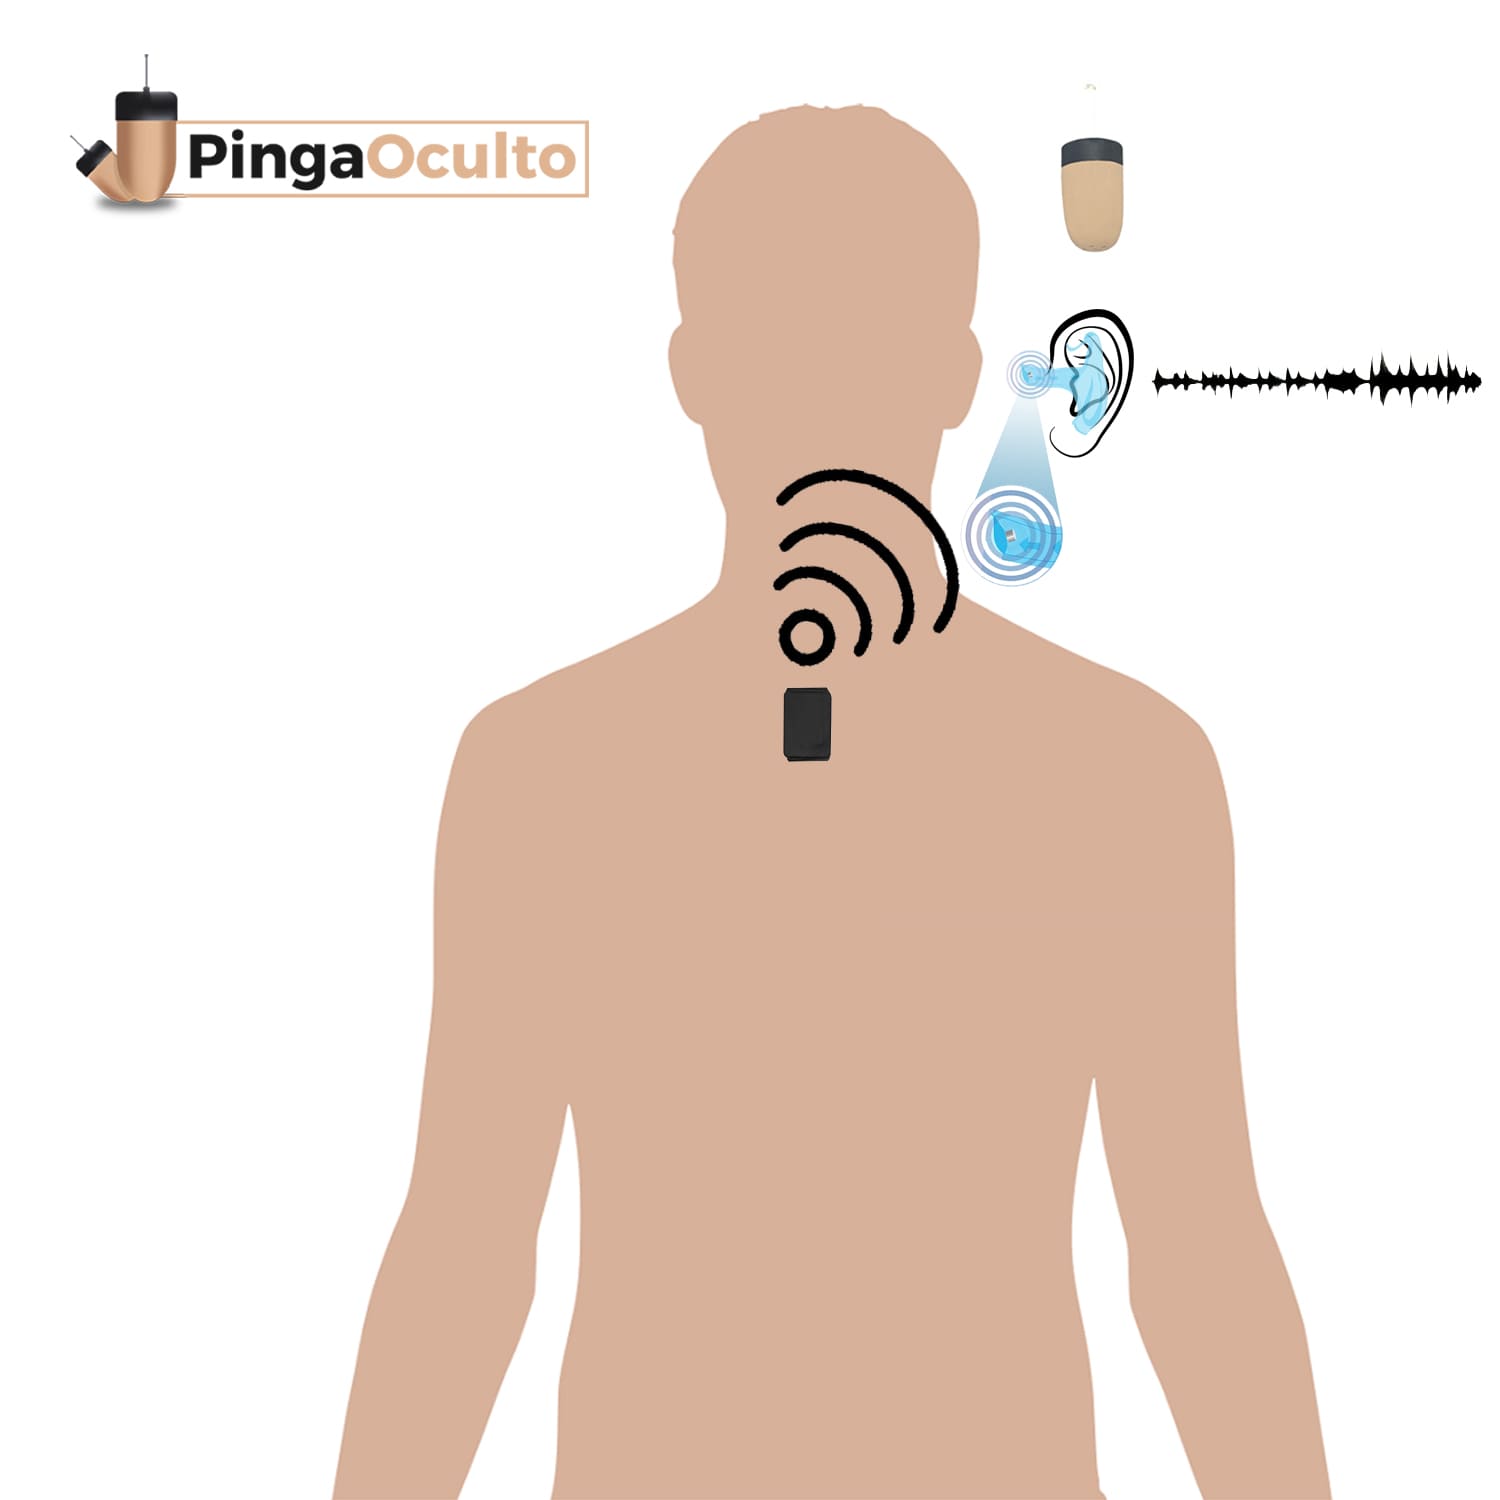 Pinganillo Vip Pro SuperMini Bluetooth - PingaOculto ®